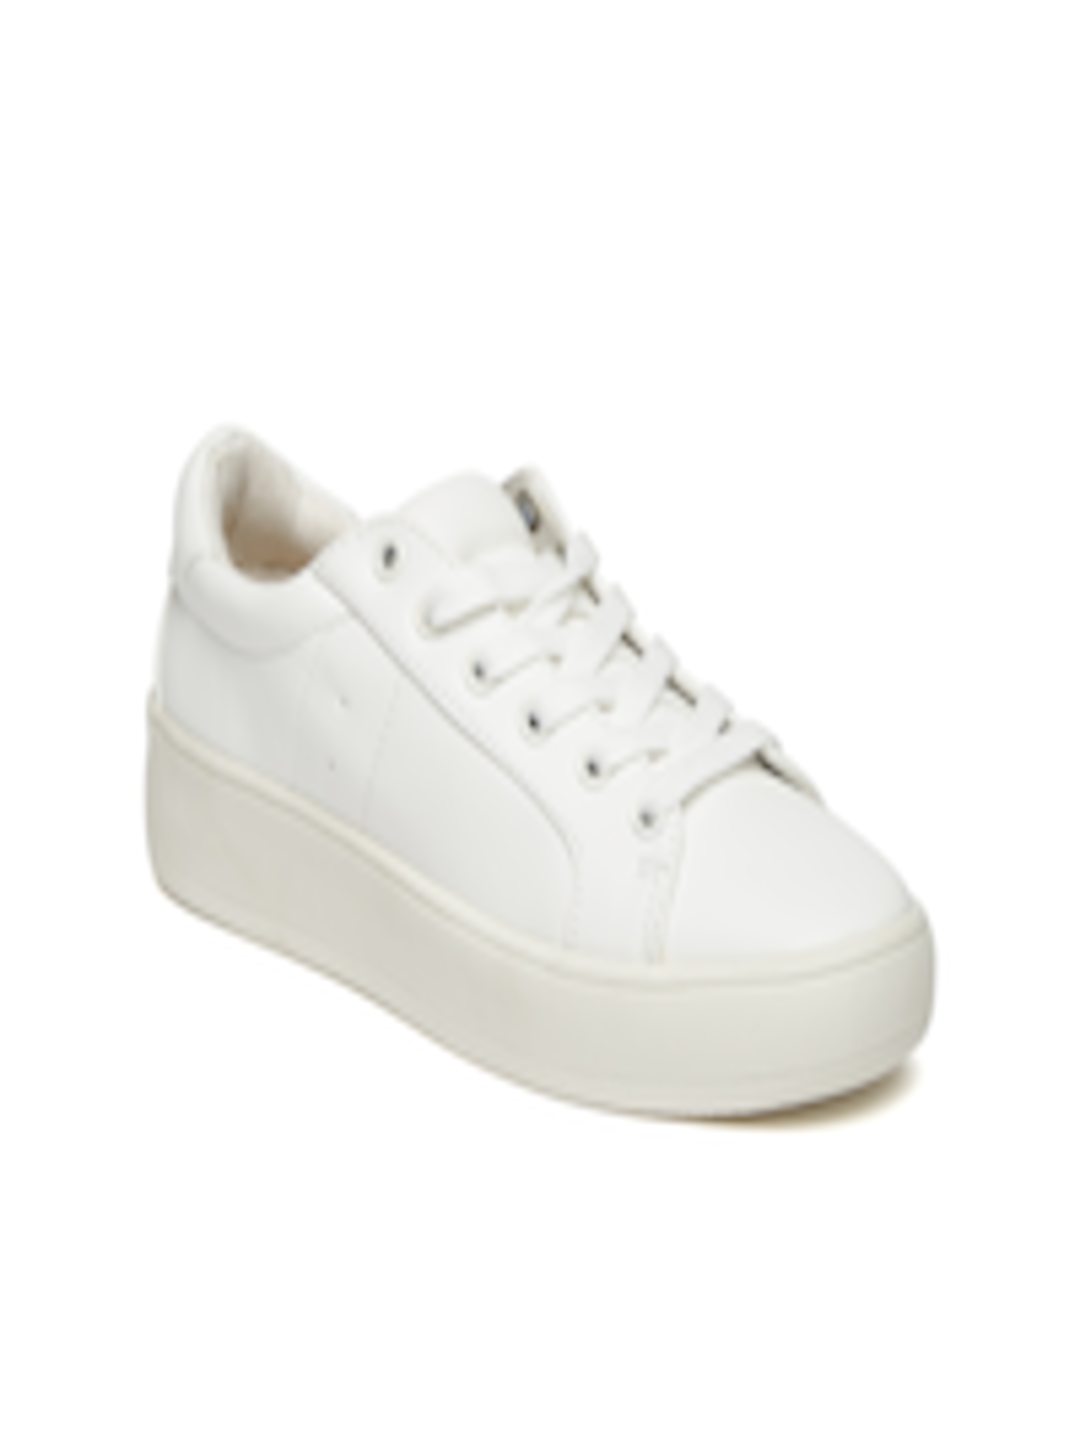 Buy Steve Madden Women White Sneakers - Casual Shoes for Women 2016959